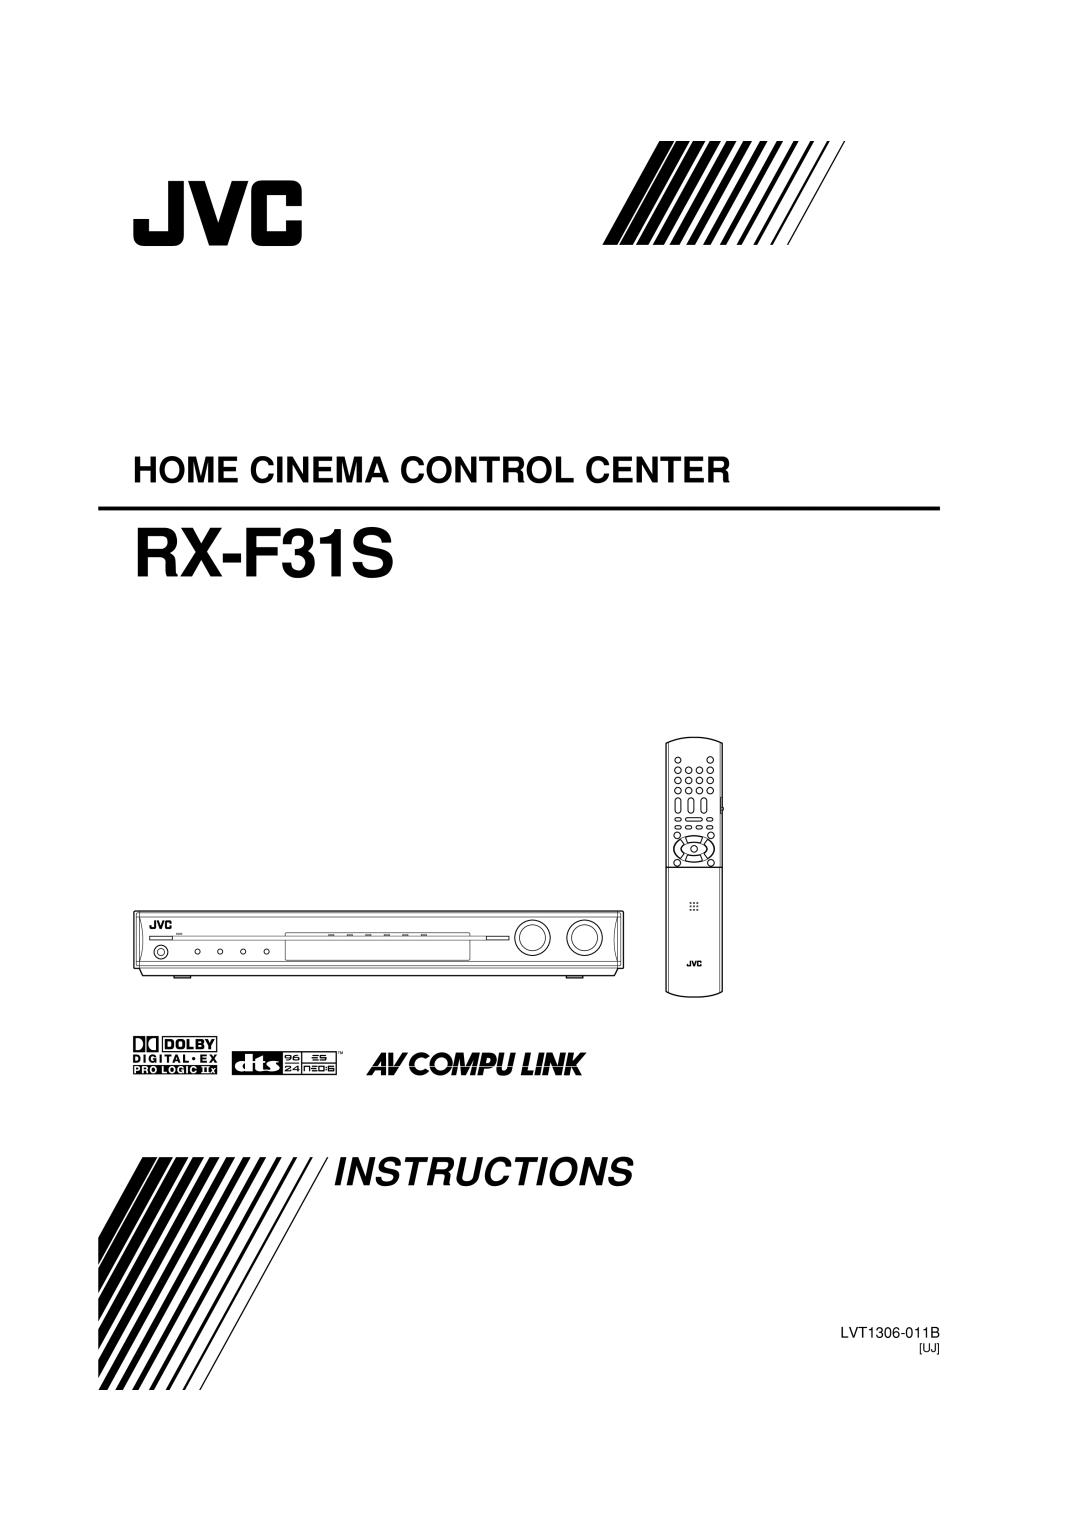 JVC RX-F31S manual Instructions, Home Cinema Control Center, LVT1306-011B 